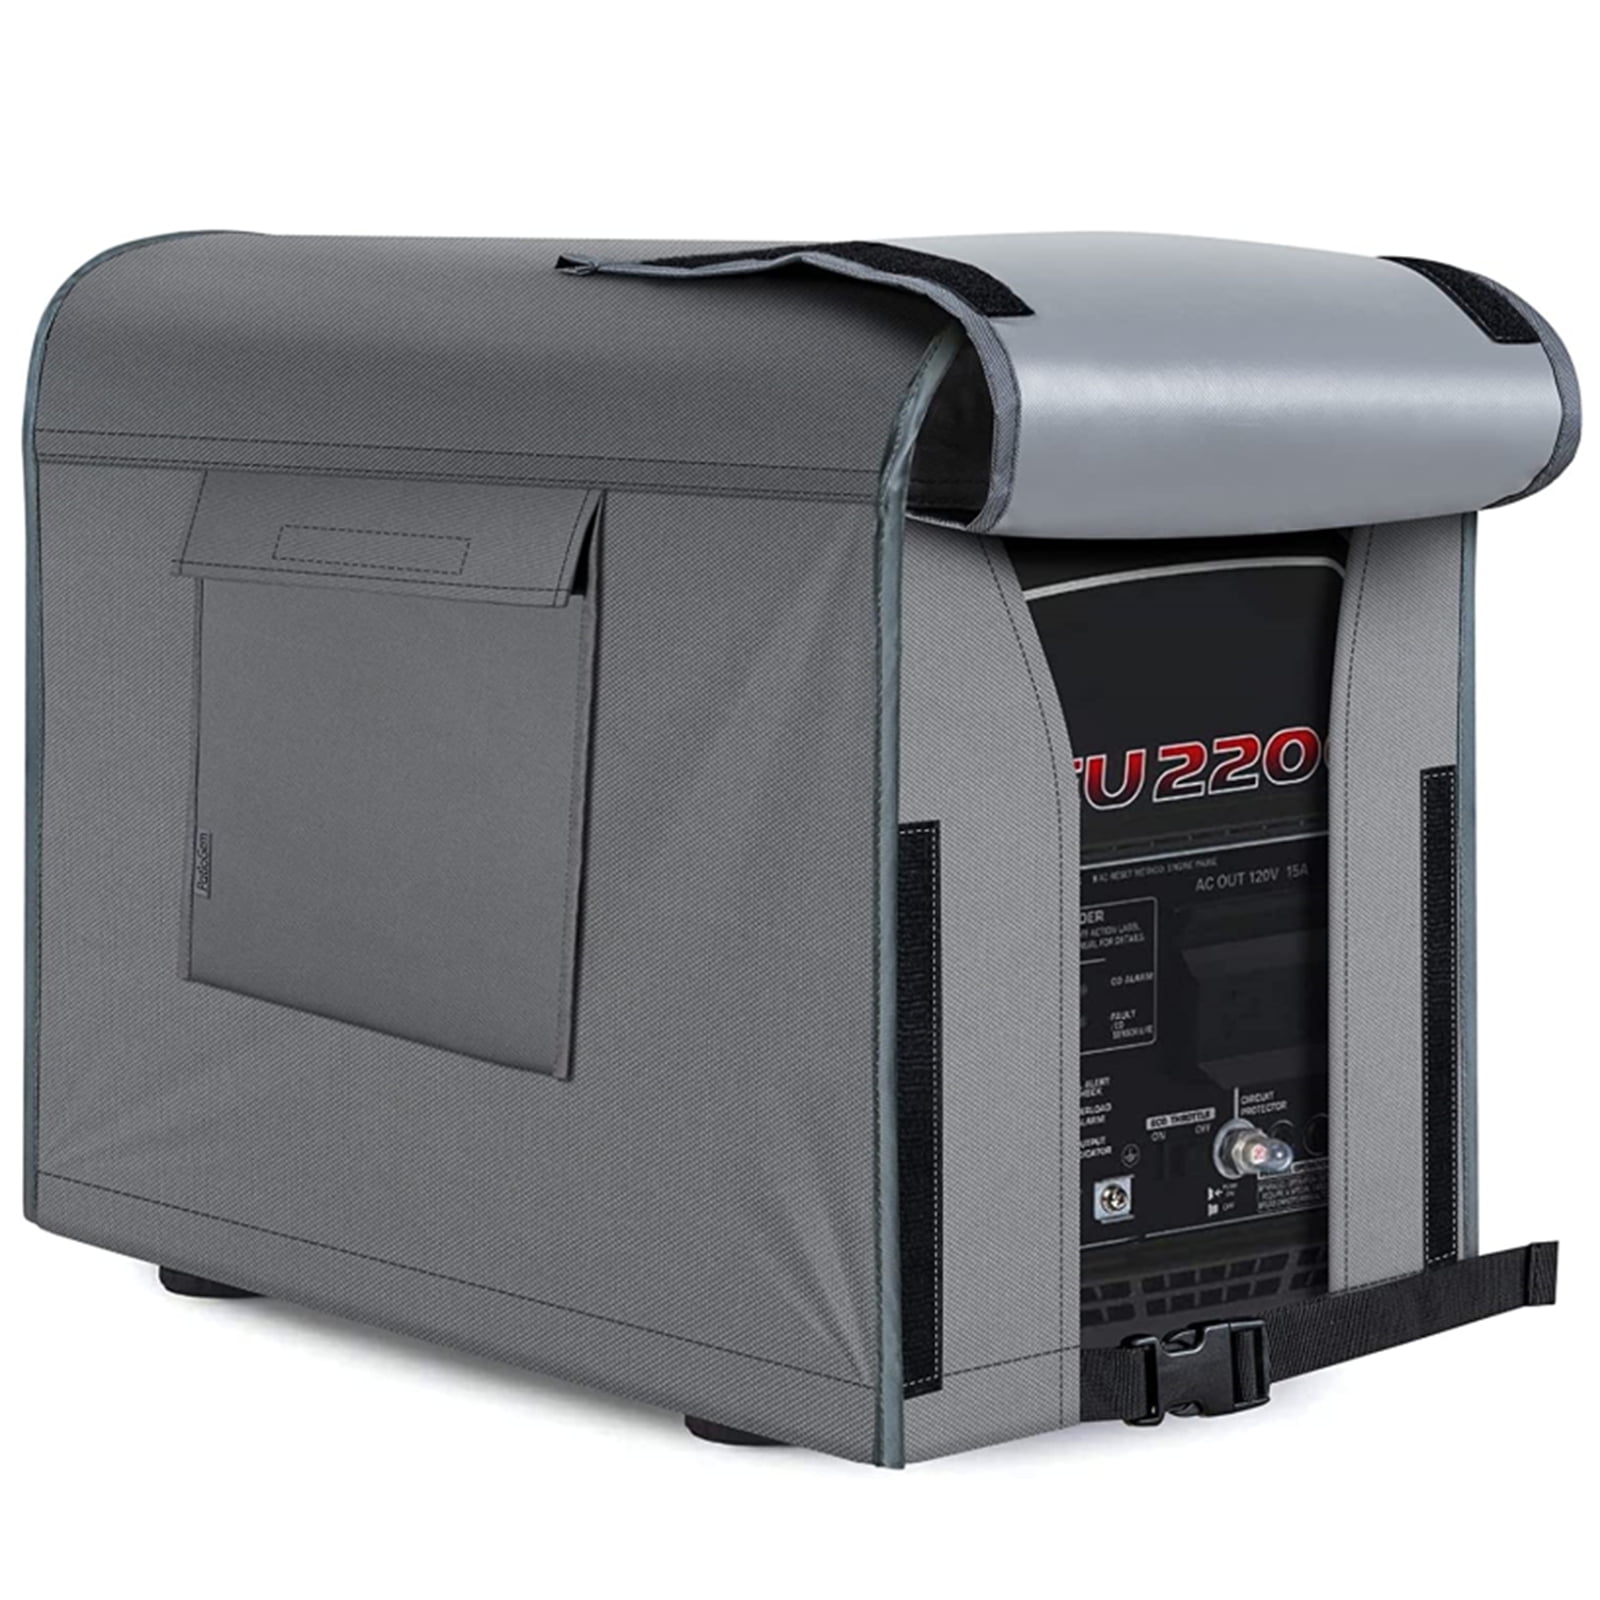 Portable Generator Cover Heavy Duty Waterproof Windproof Storage  32”Lx24”Wx24”H